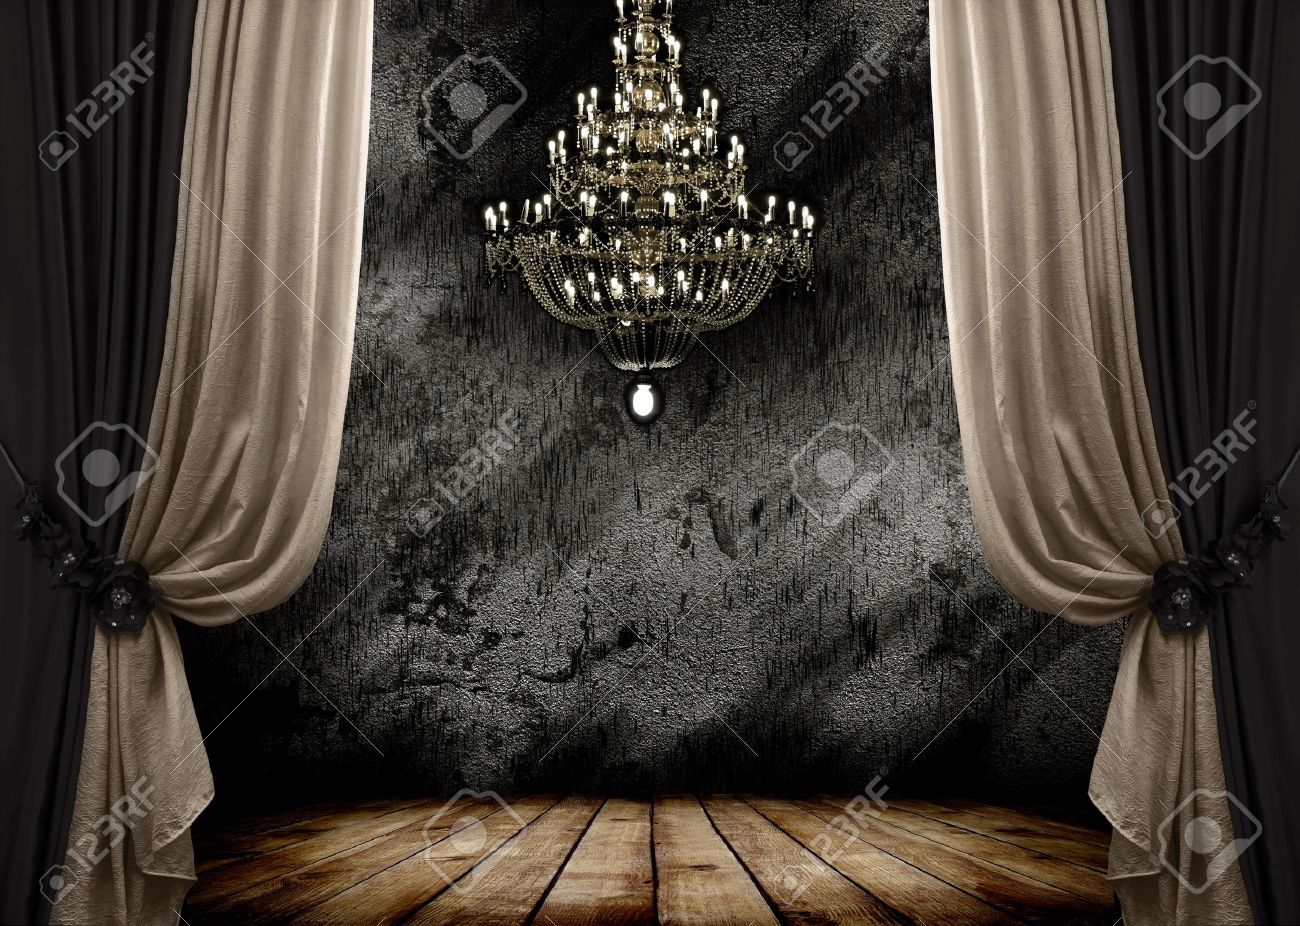 Image Of Grunge Dark Room Interior With Wood Floor And Chandelier